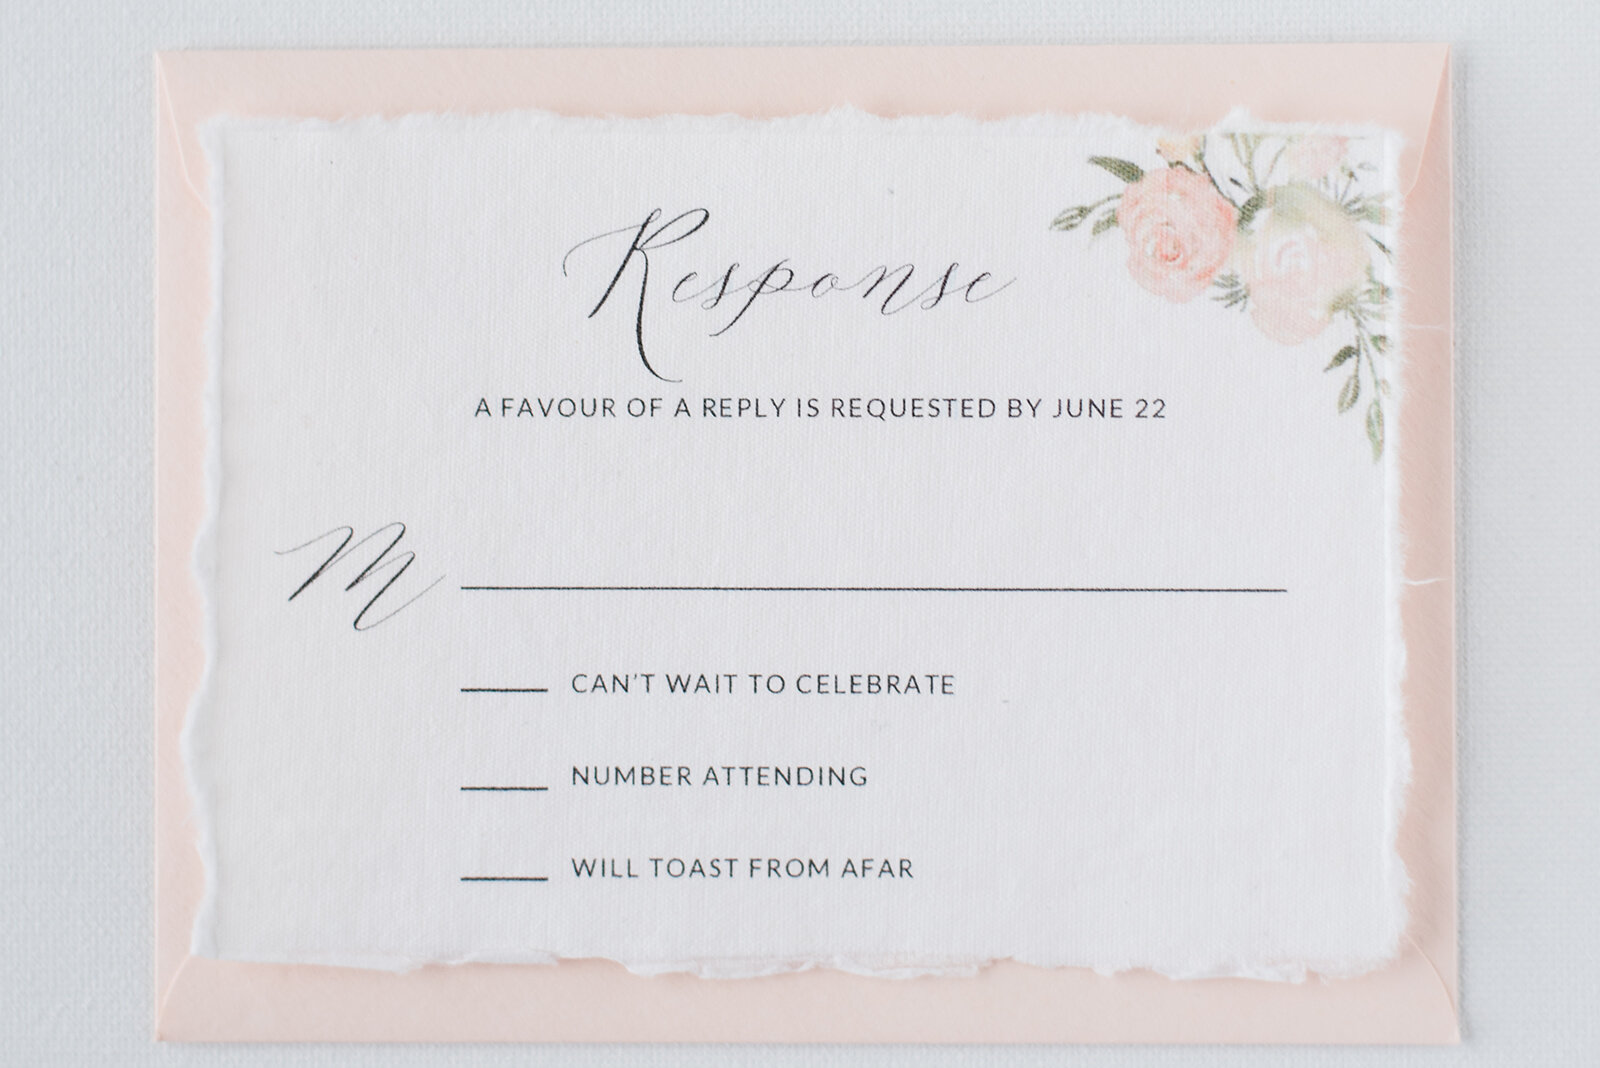 wedding invitation response card by pink champagne designs.jpg